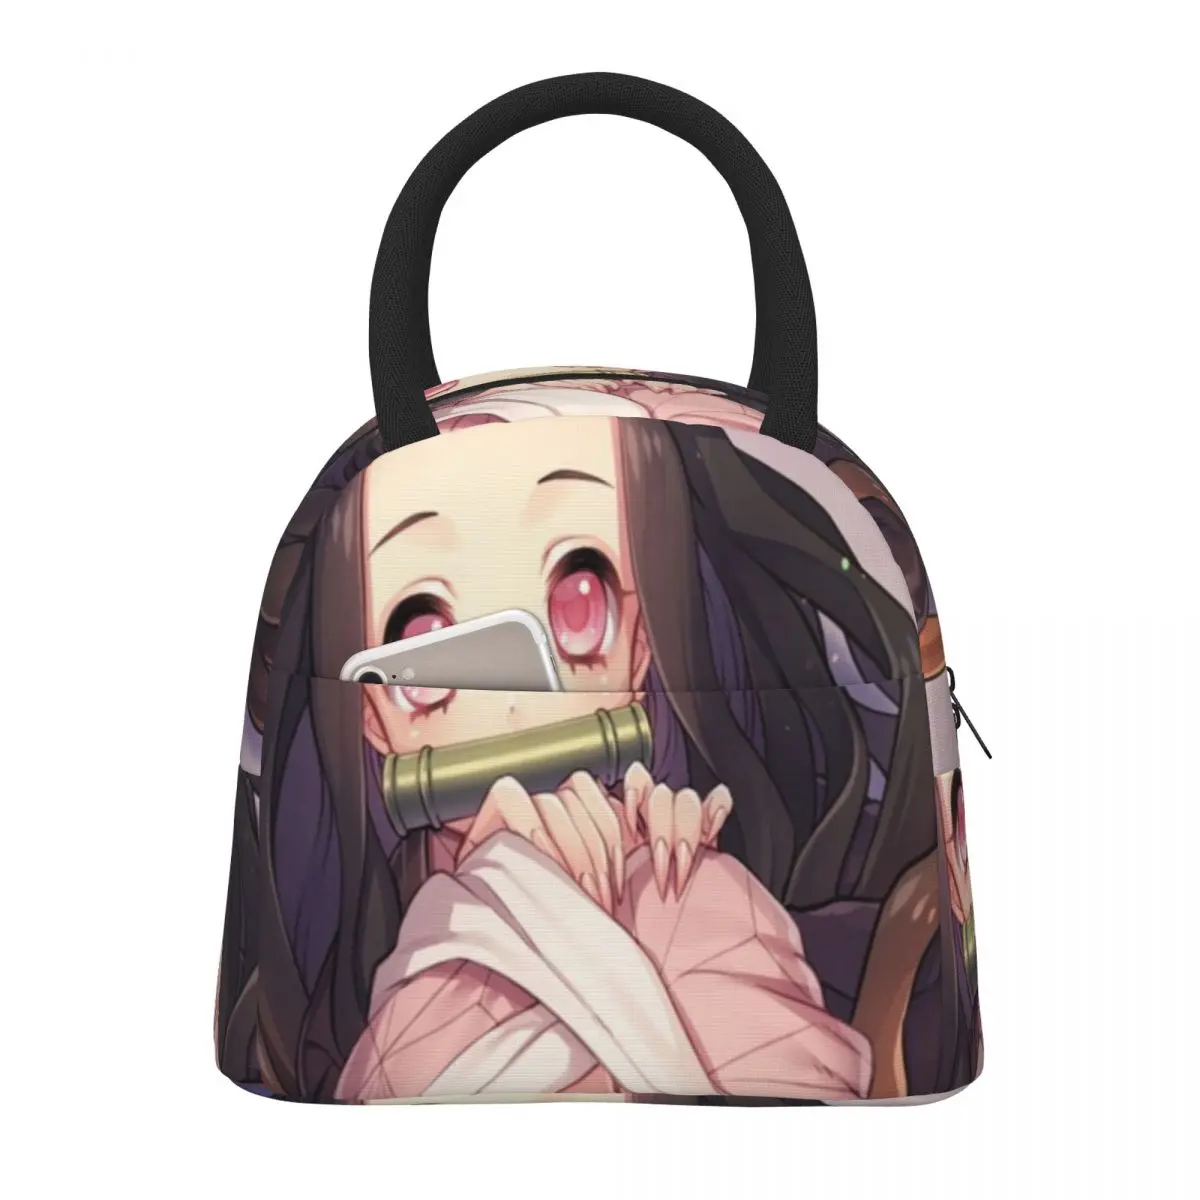 Chibi Nezuko Demon Slayer Lunch Bag For Unisex Lunch Box Travel